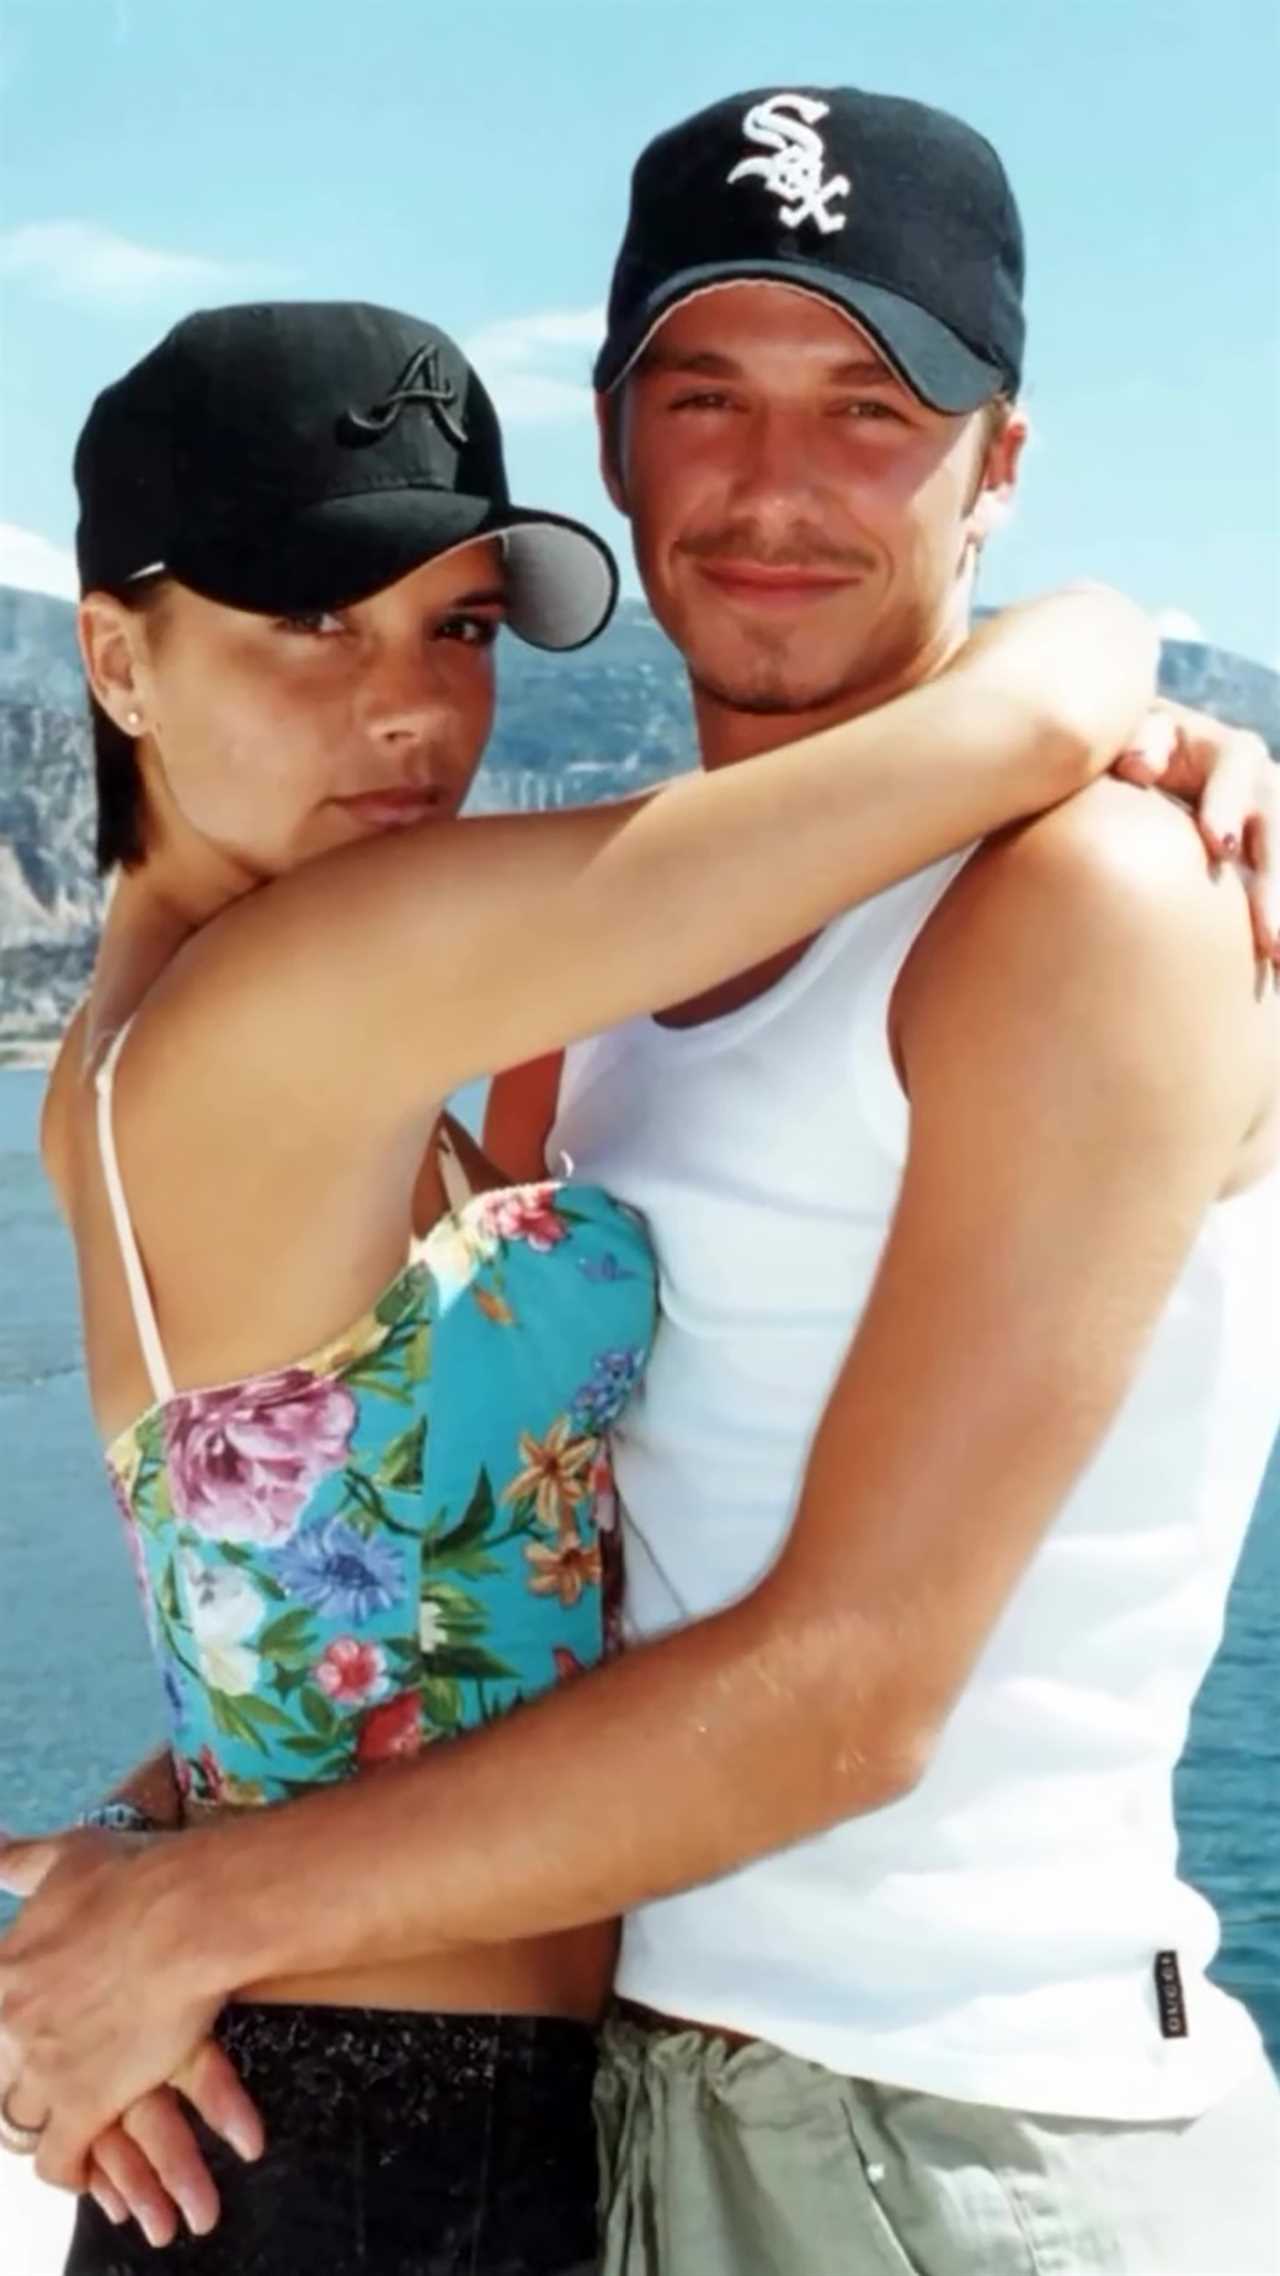 David Beckham Shares Unseen Pics of Victoria Beckham on Her 50th Birthday